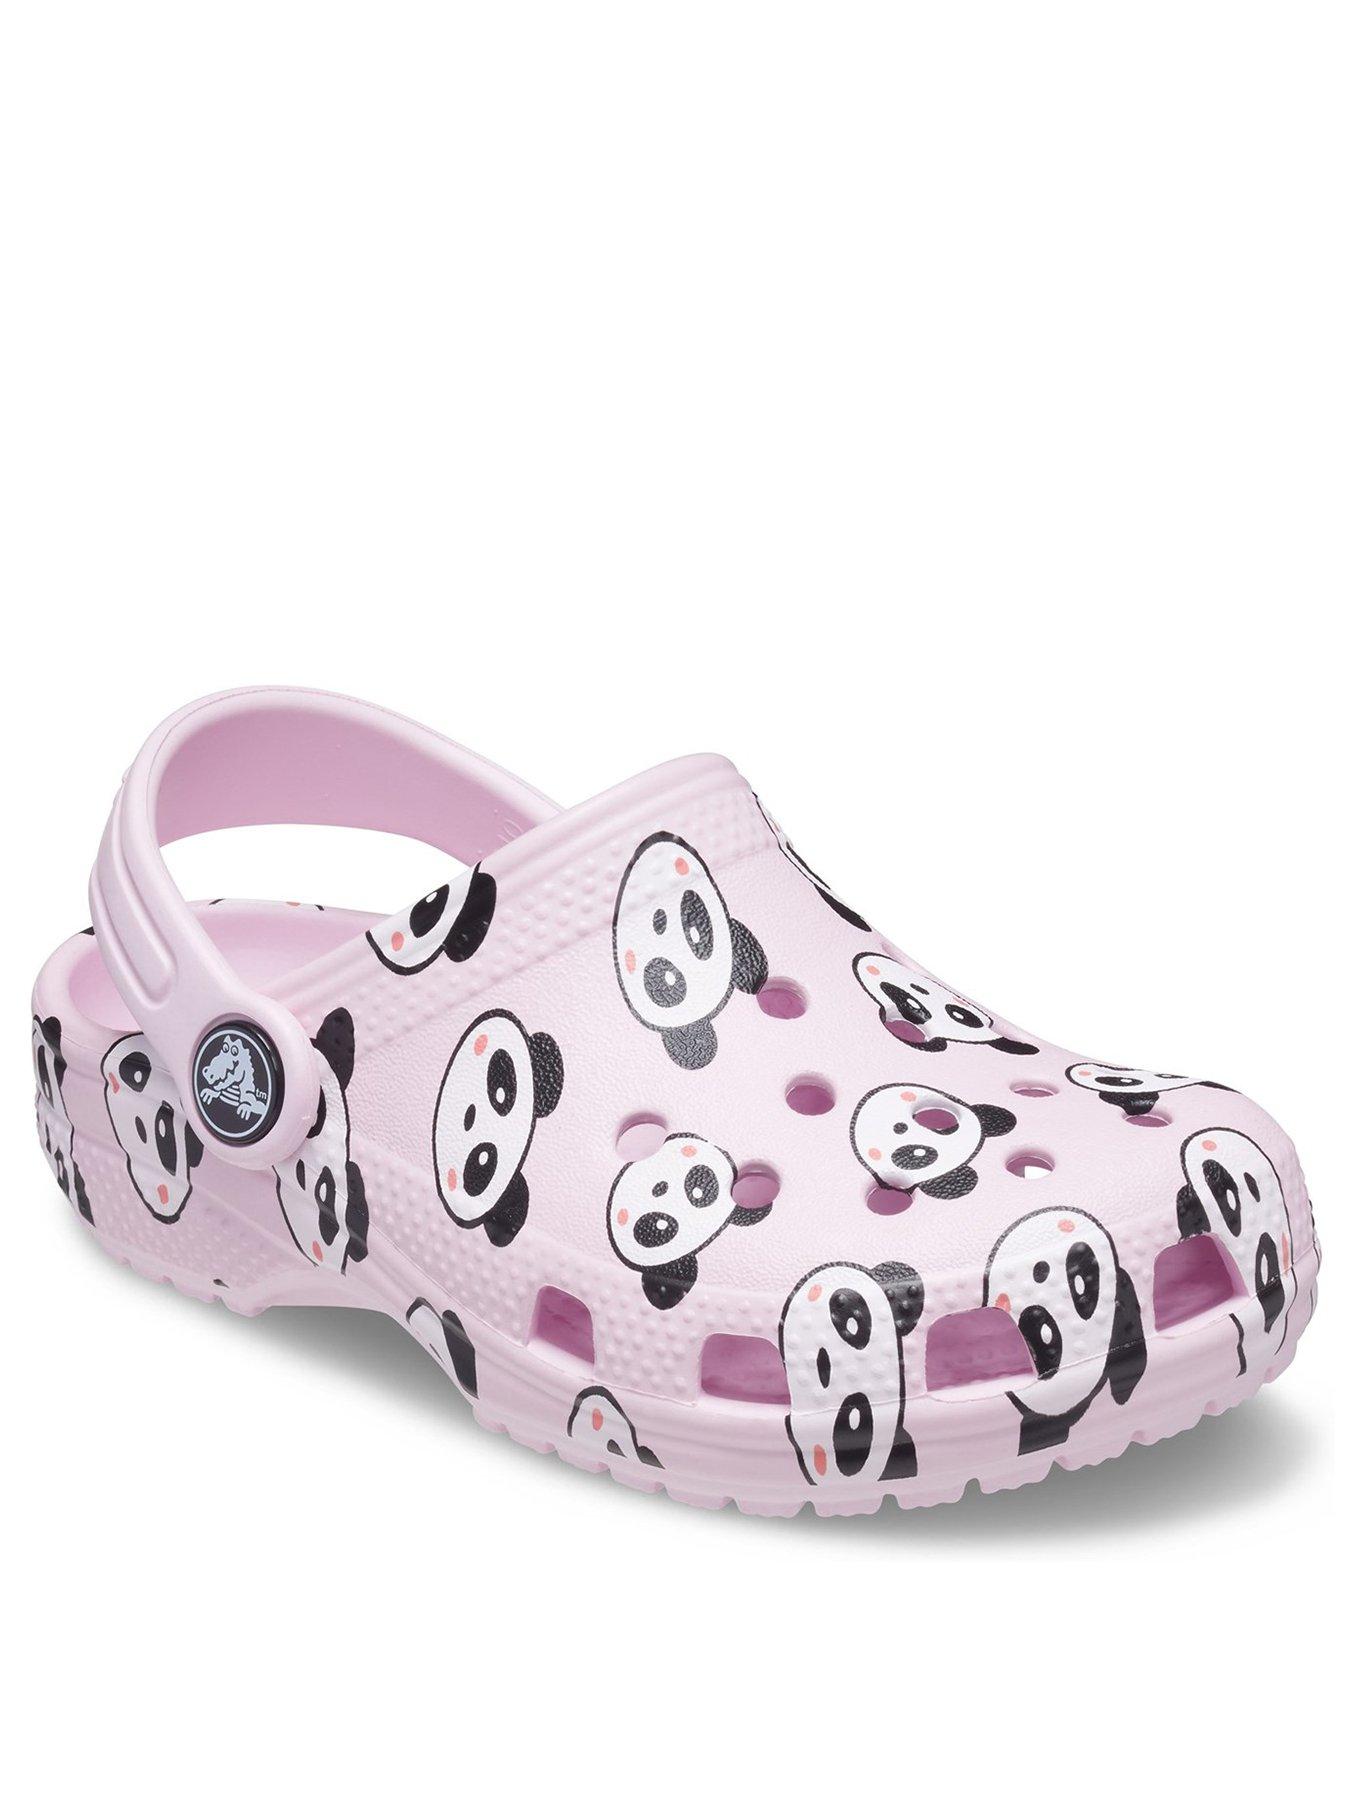 Shoes & boots Girls Panda Clog Sandals - Pink